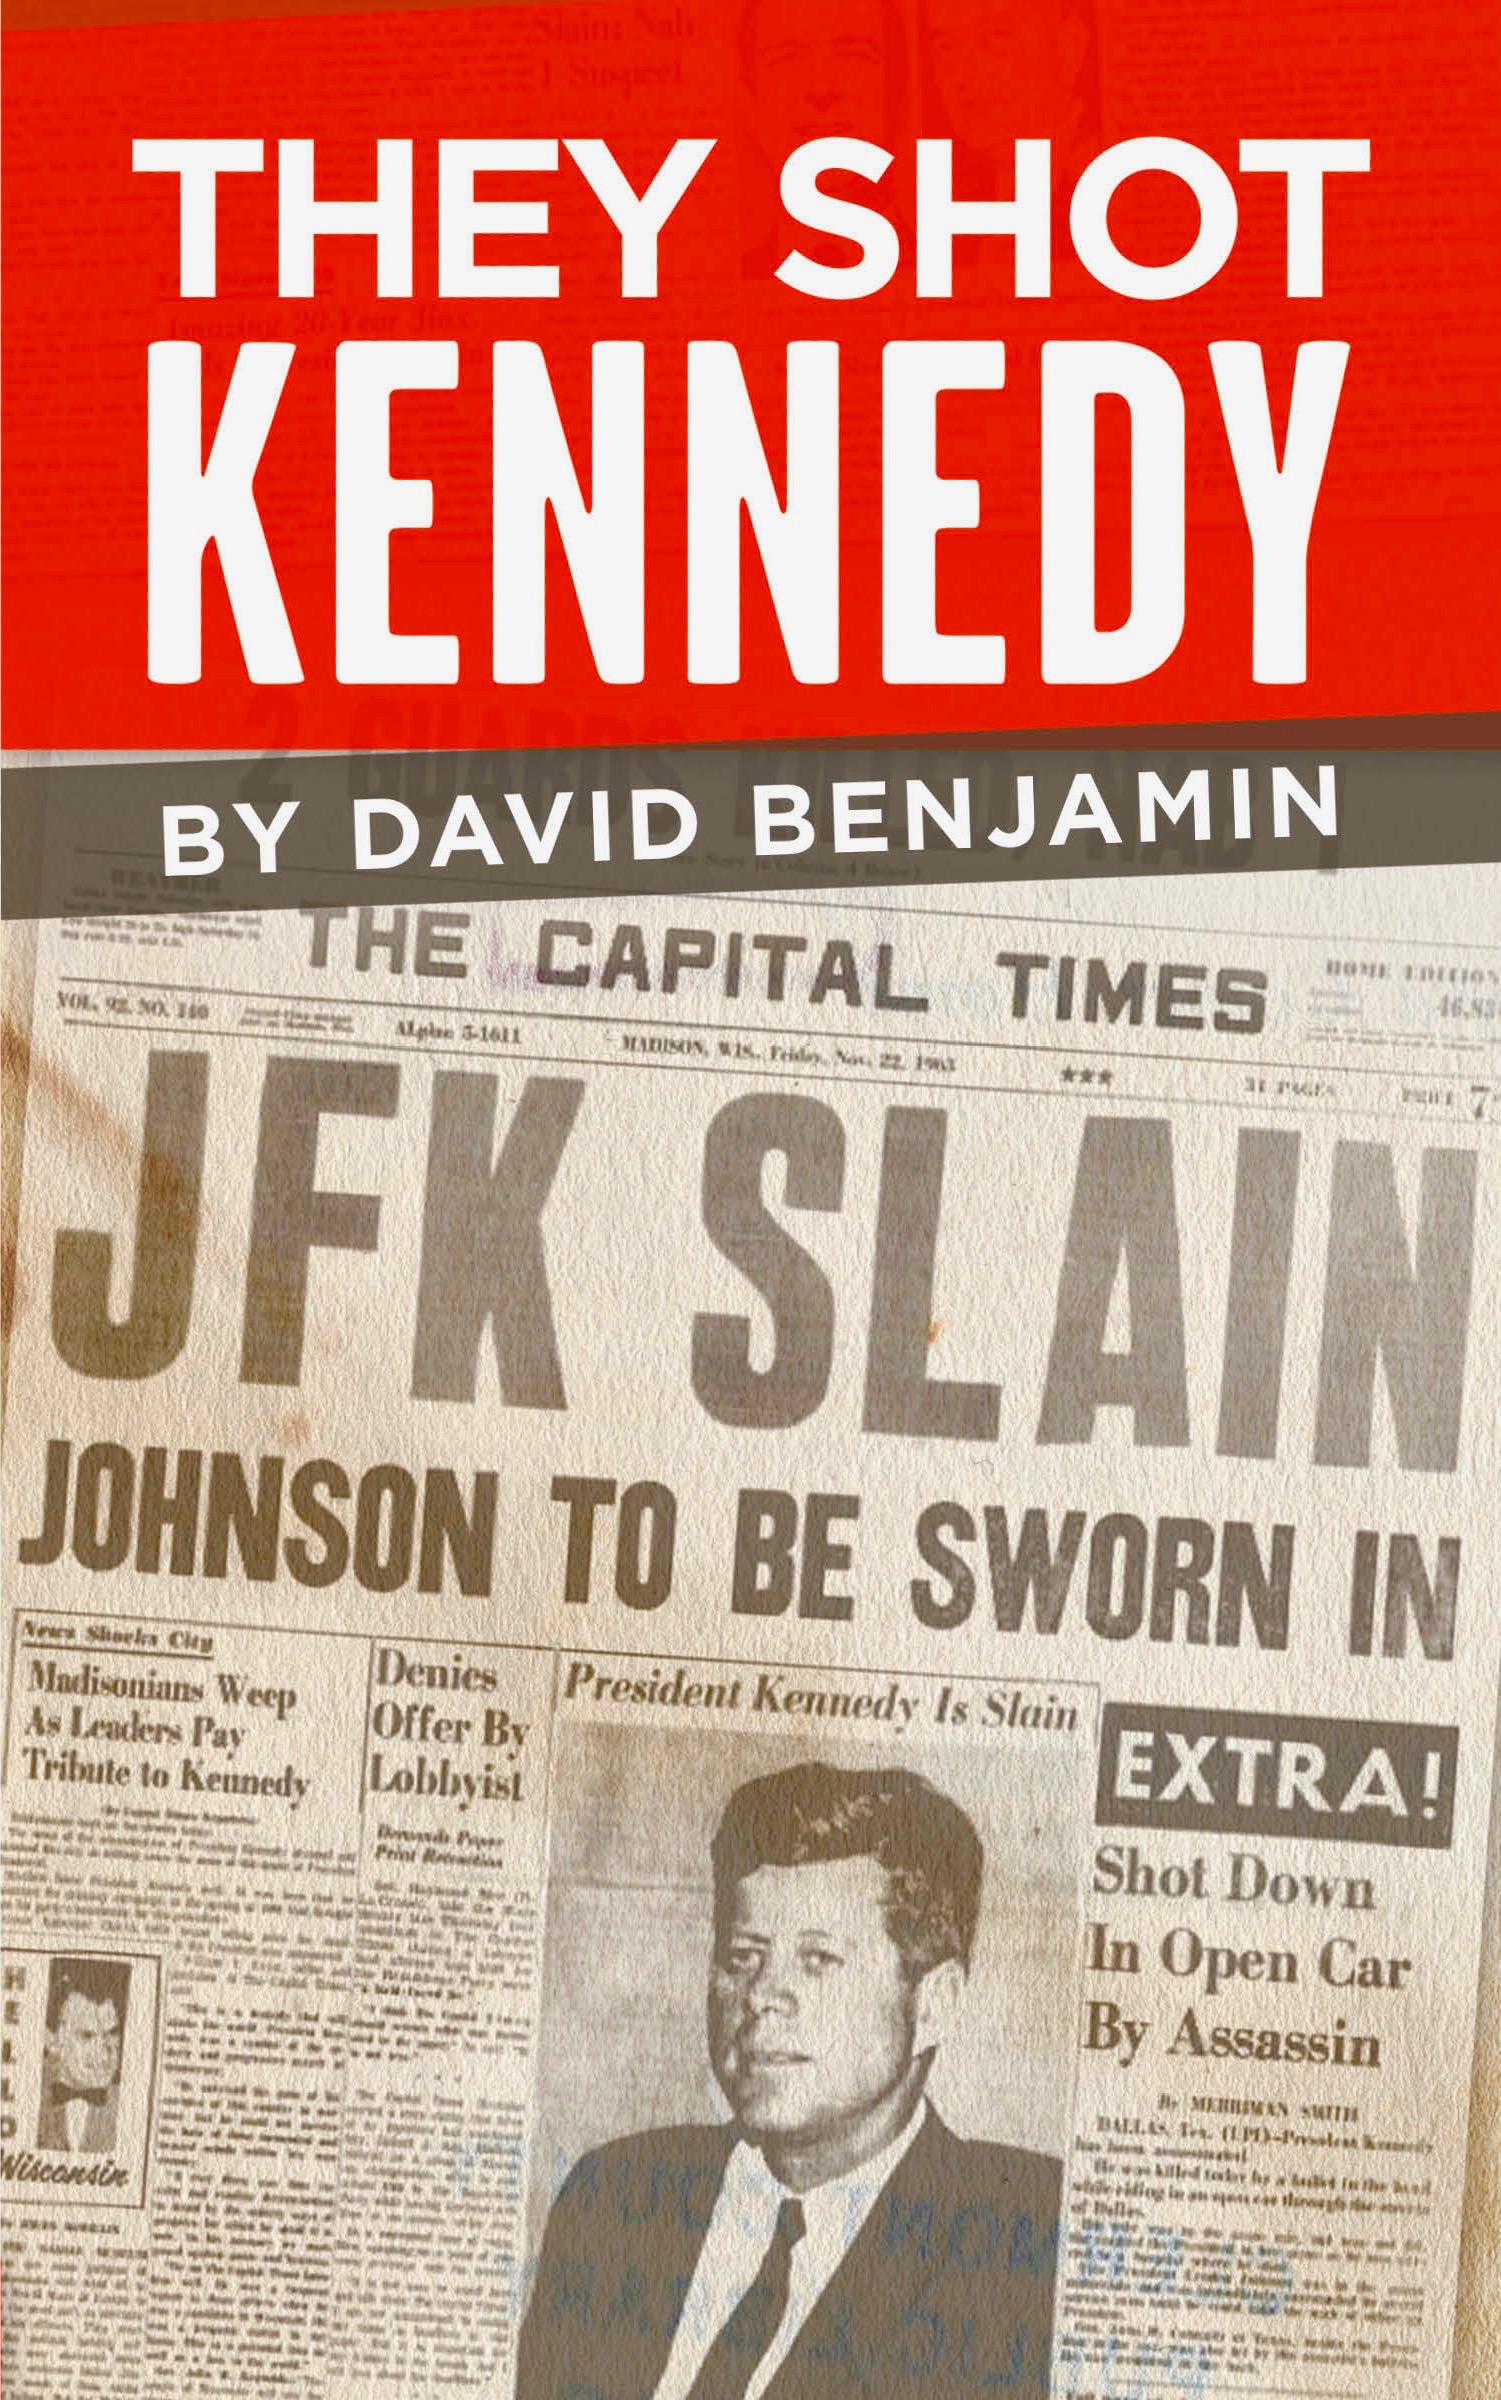 They Shot Kennedy, written by David Benjamin